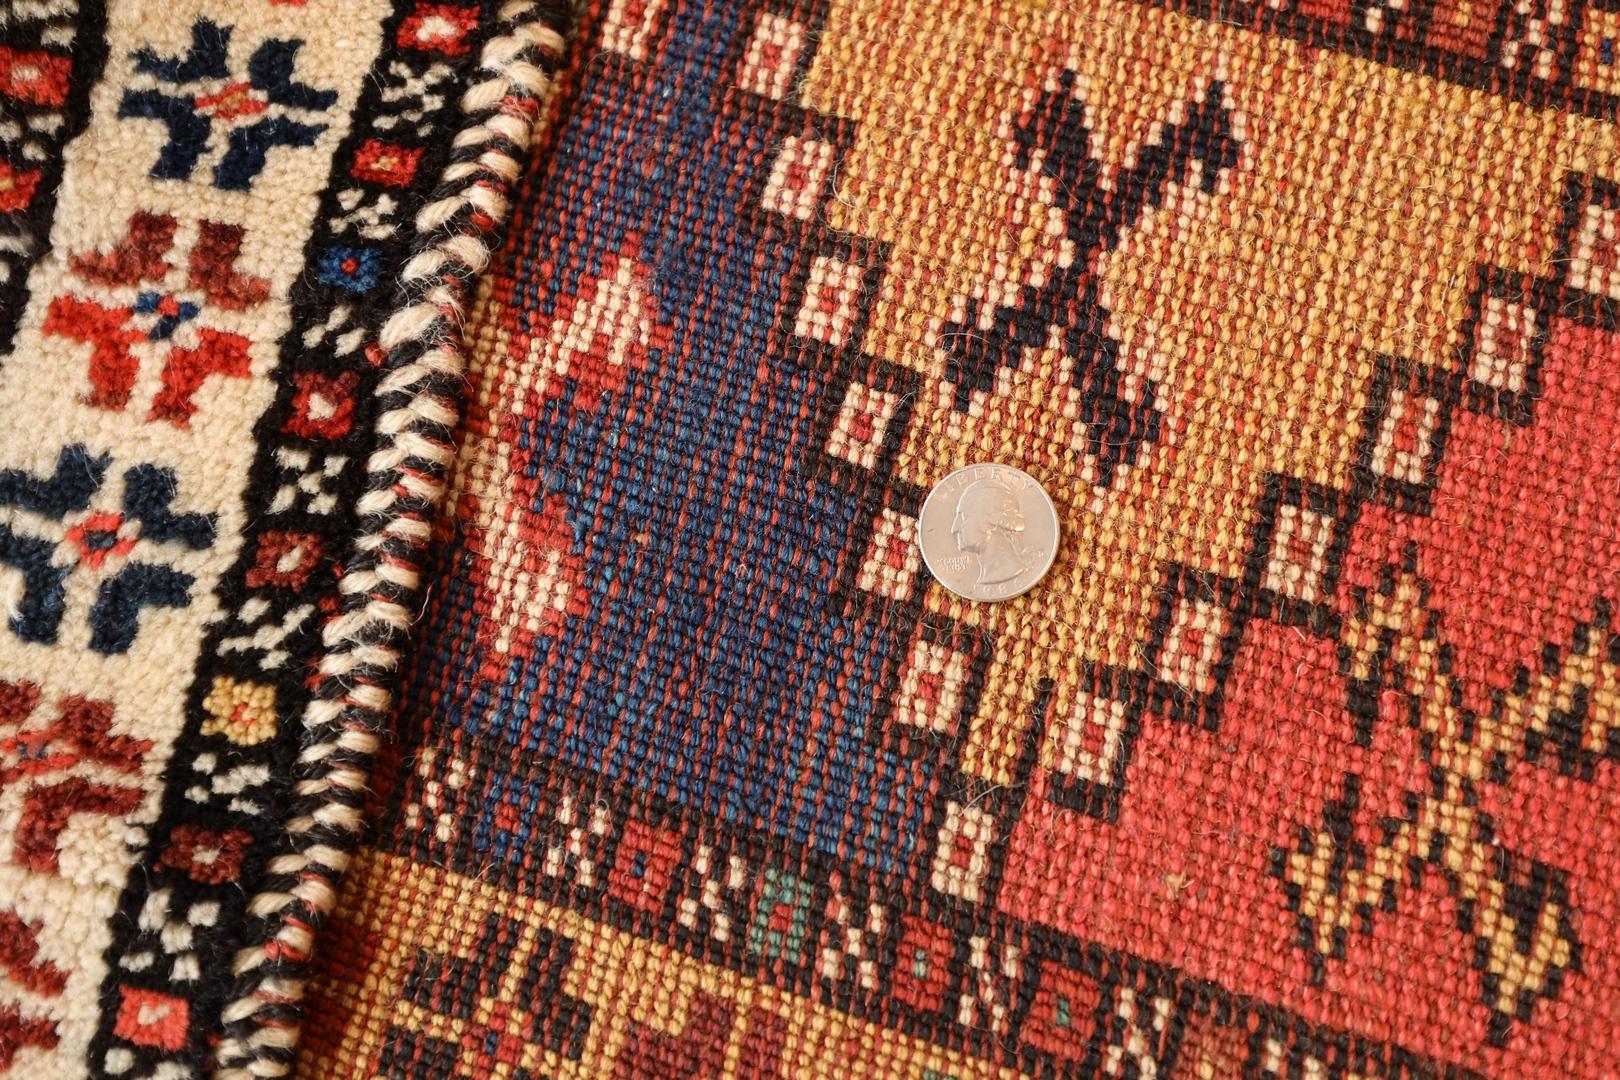 Kurd Antique rug, Colorful - 5'11